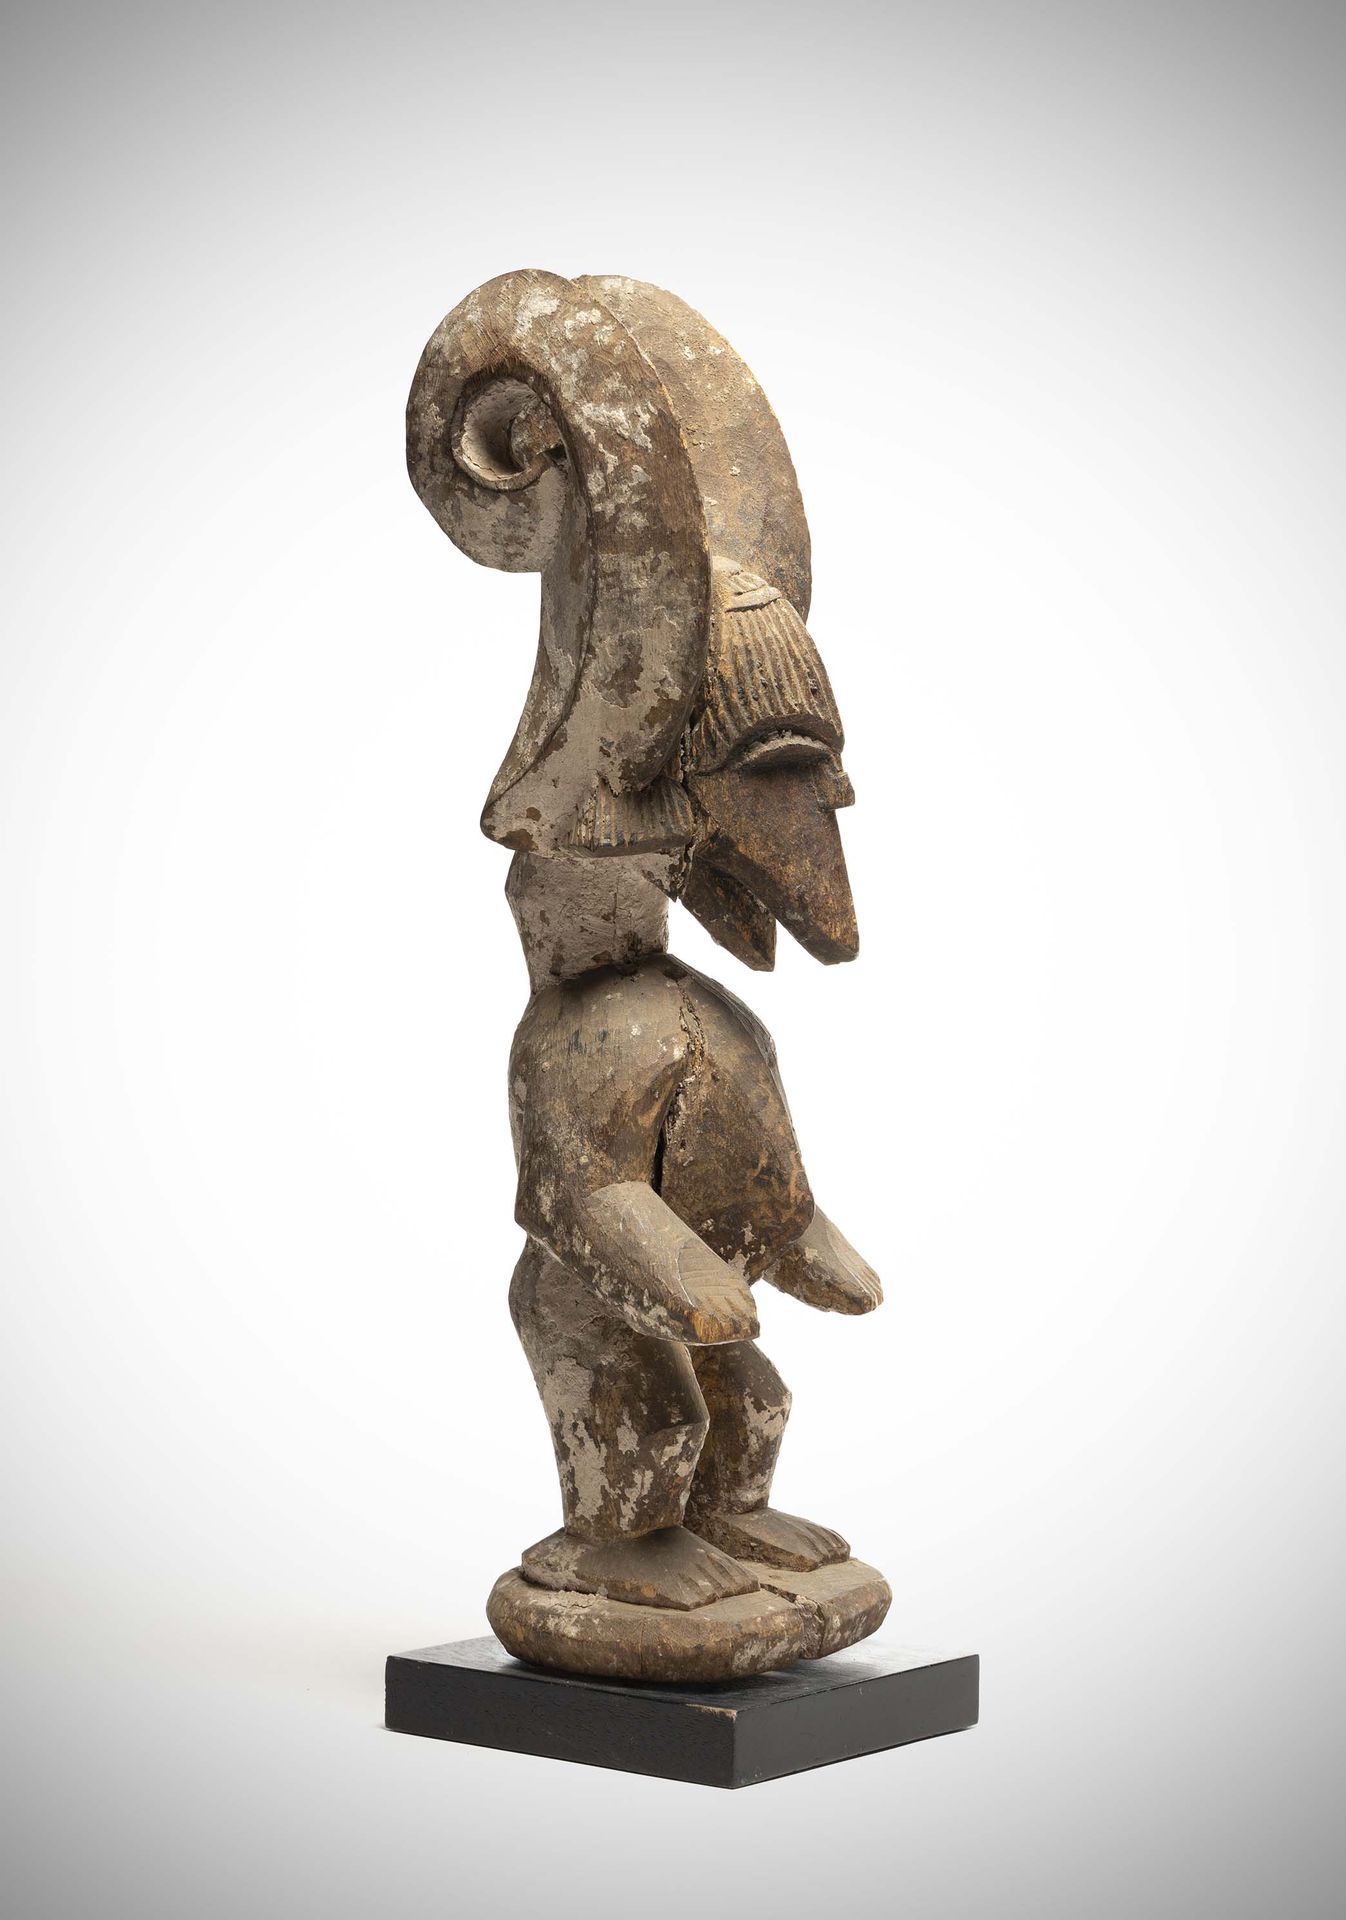 Null Ibo

(Nigeria) Anthropo-zoomorphic statue of the "Ikenga" cult representing&hellip;